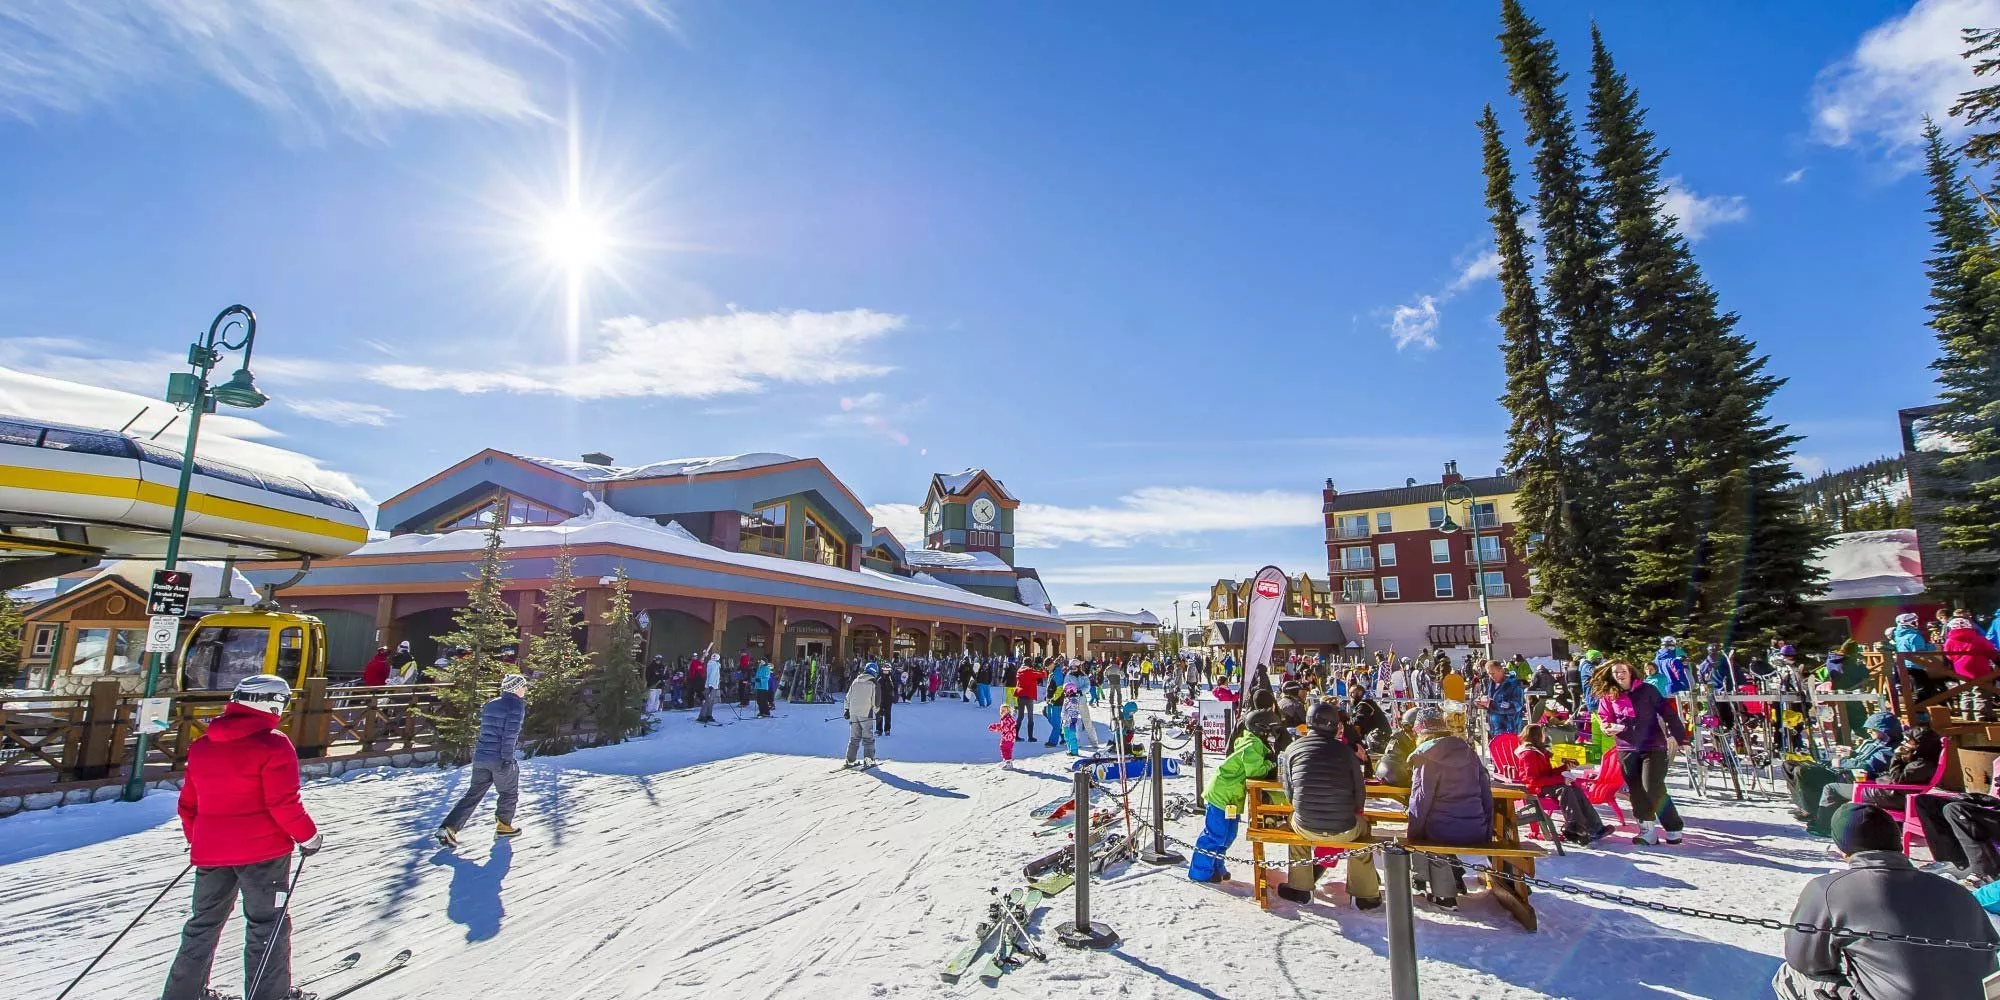 Cyprus Ski Club in Cyprus, Europe | Snowboarding,Skiing - Rated 3.4